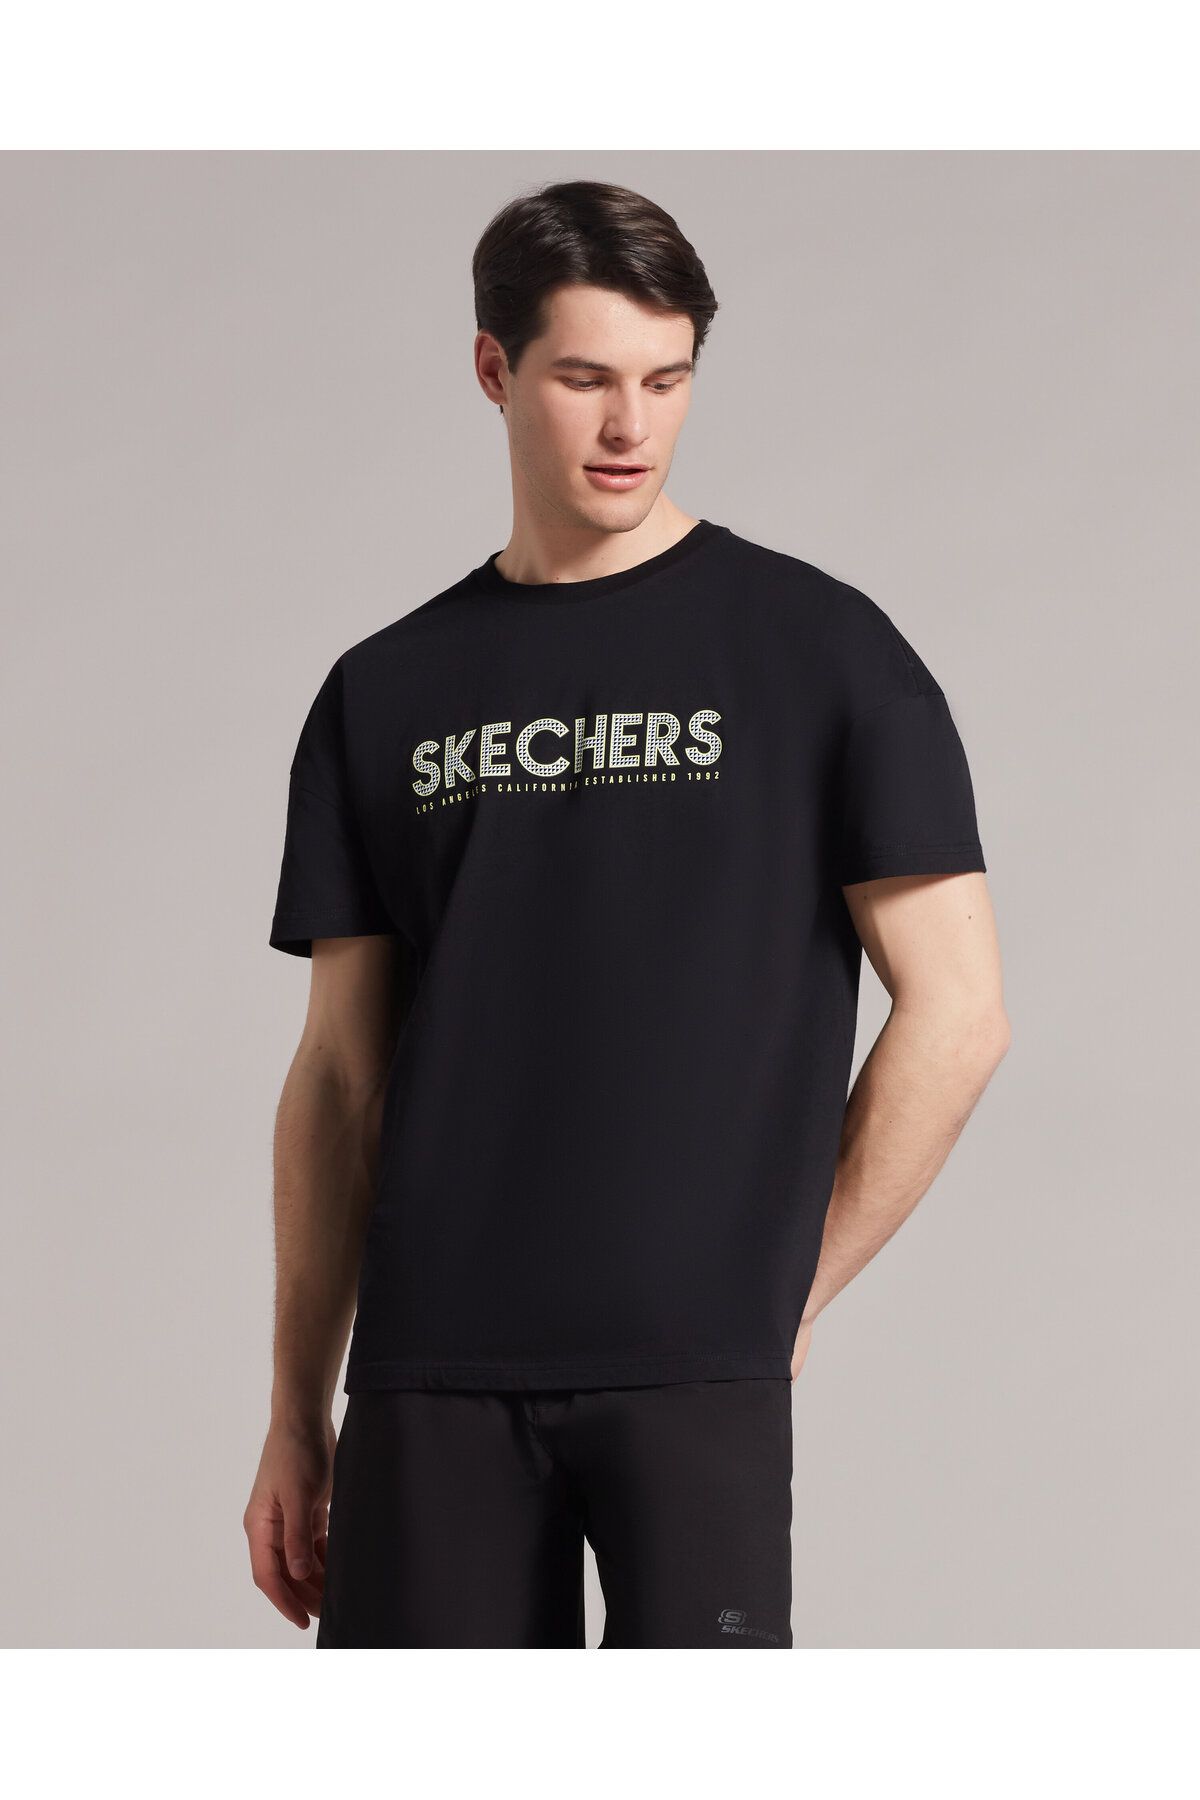 Skechers M Graphic Tee Big Logo T-shirt Erkek Siyah Tshirt S221135-001